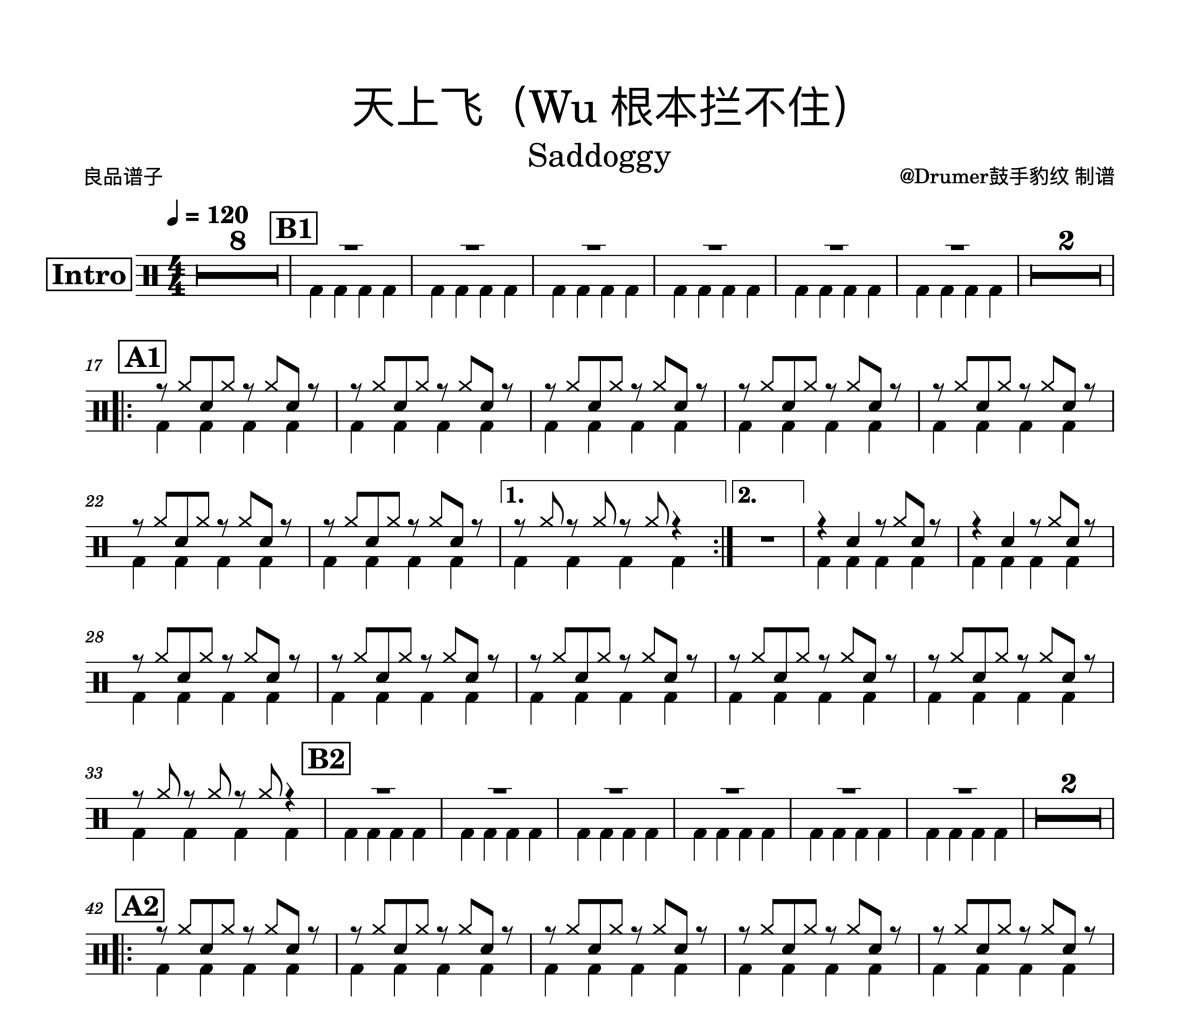 Saddoggy-天上飞（Wu 根本拦不住）架子鼓谱爵士鼓曲谱